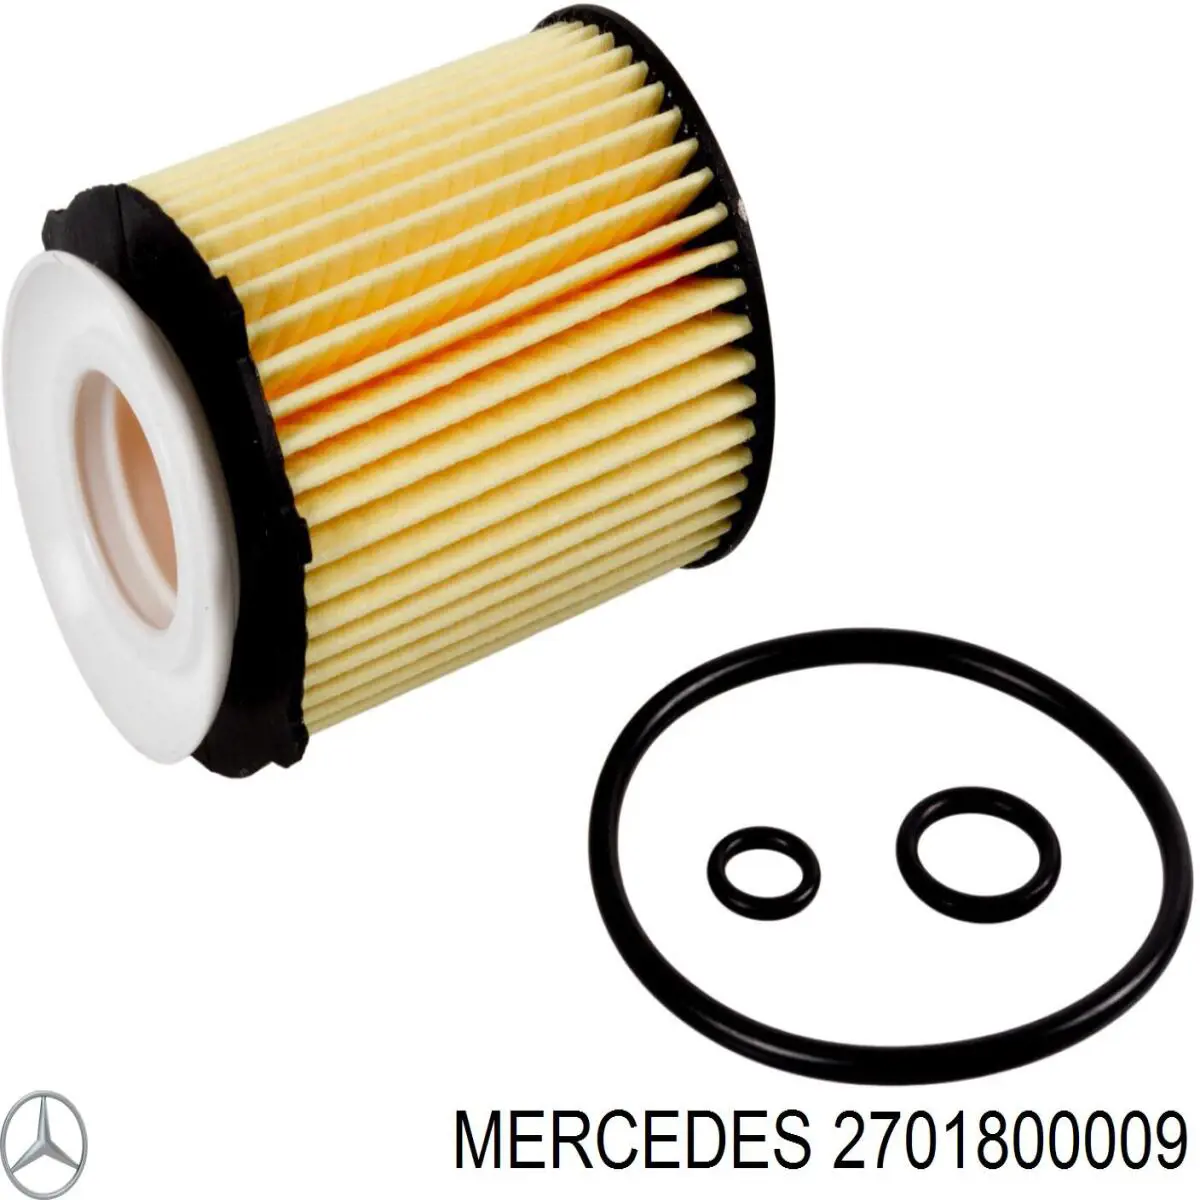 2701800009 Mercedes filtro de aceite